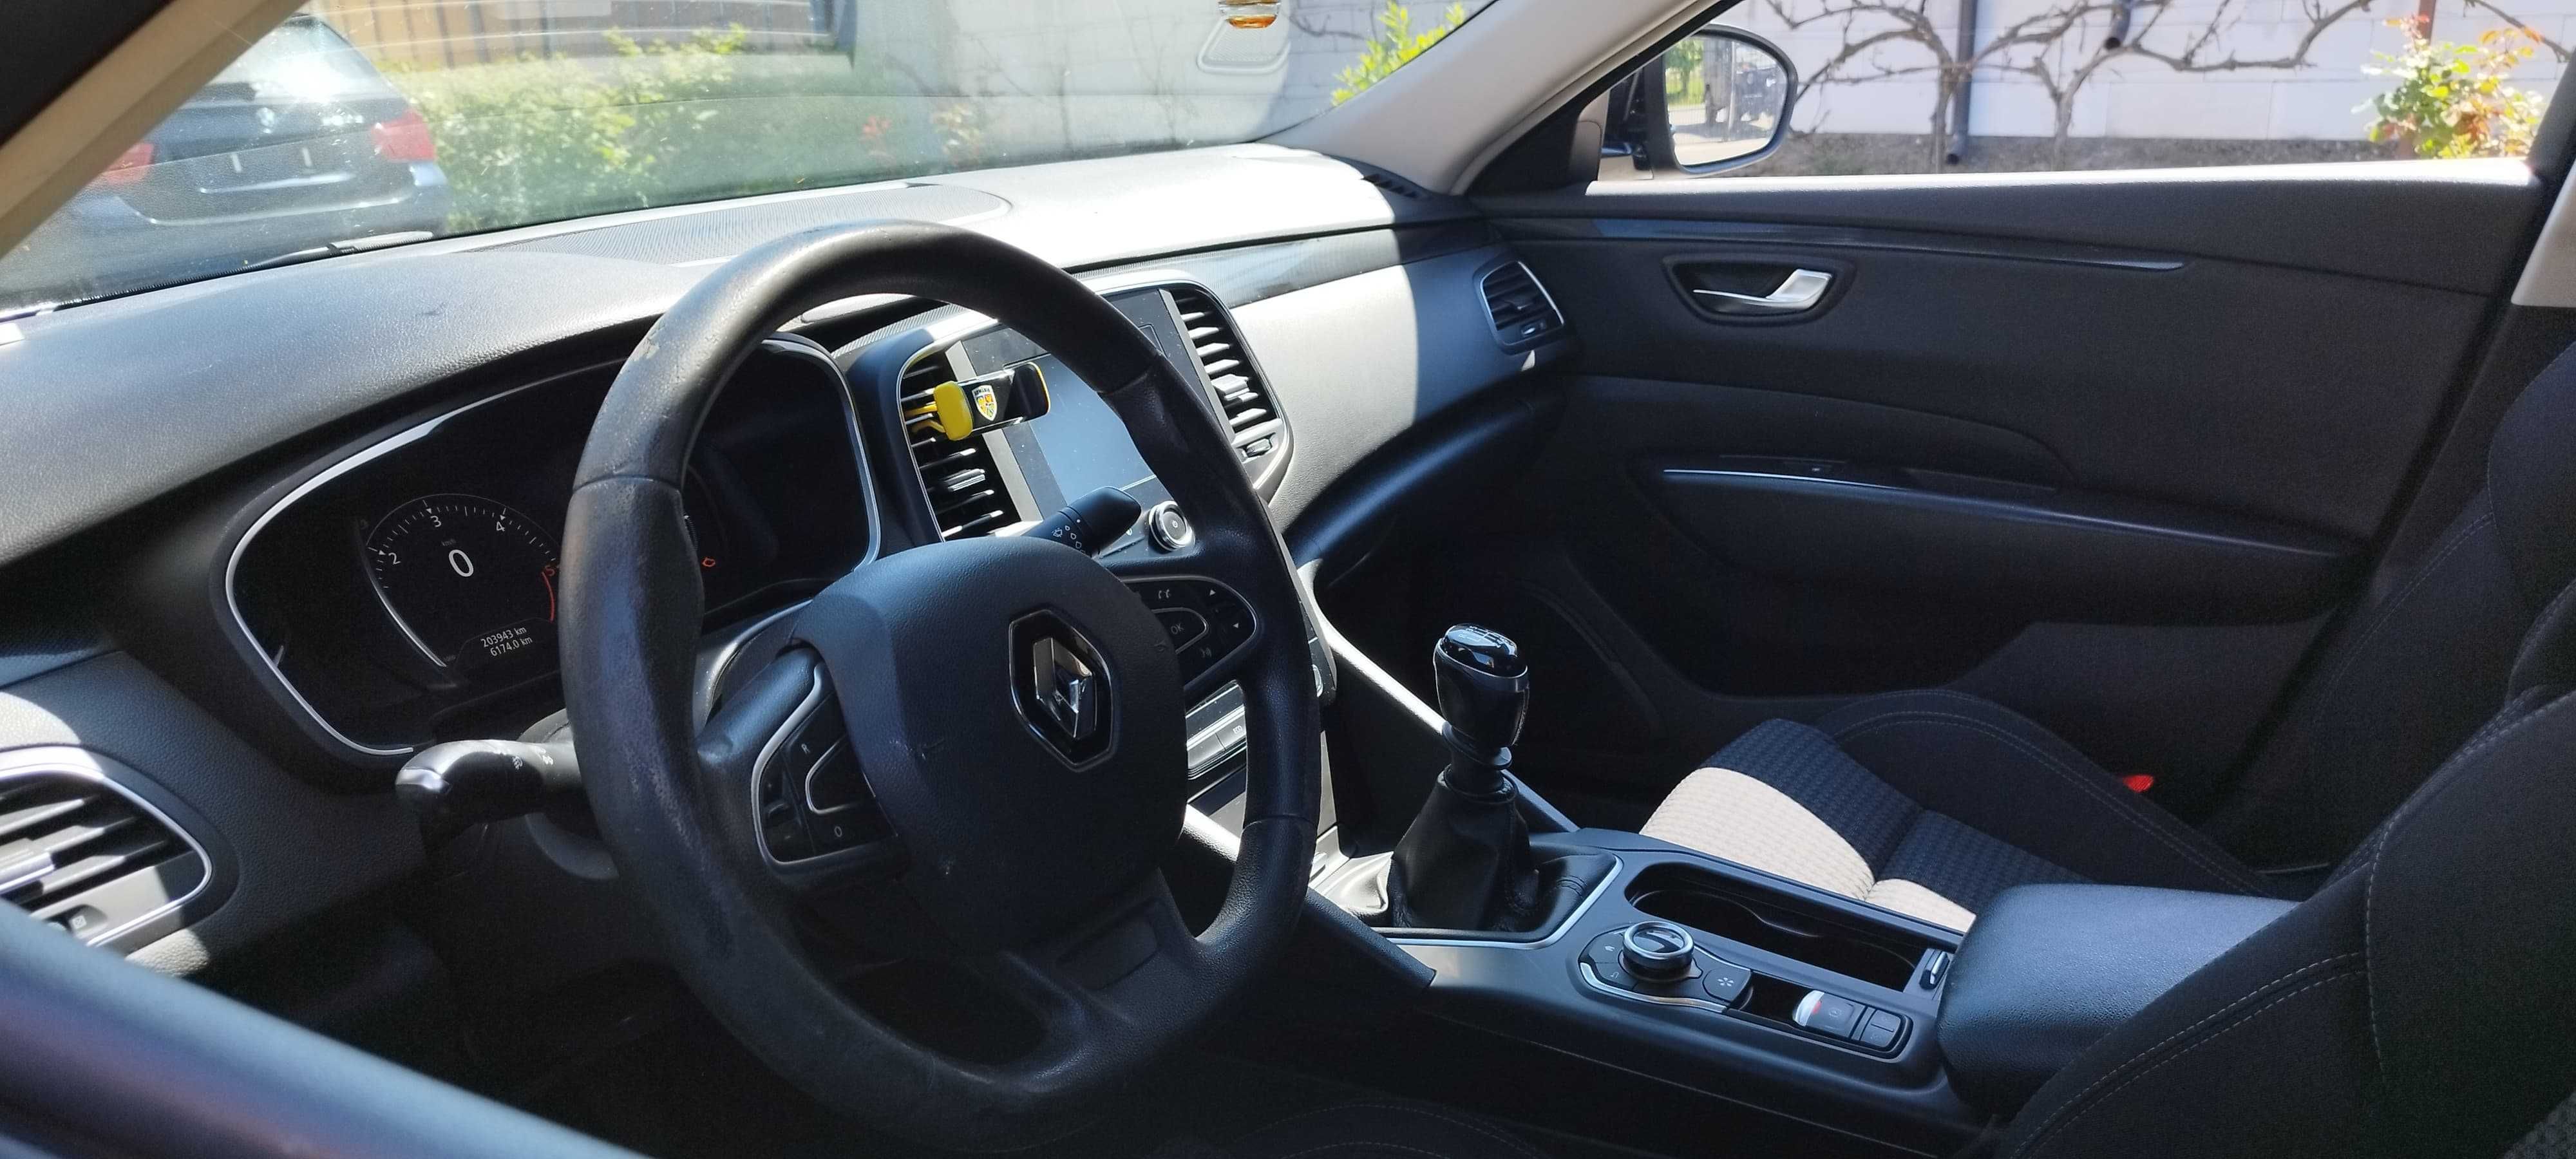 De vanzare! Ocazie Unica: Vanzare Renault Talisman  (iunie 2016)